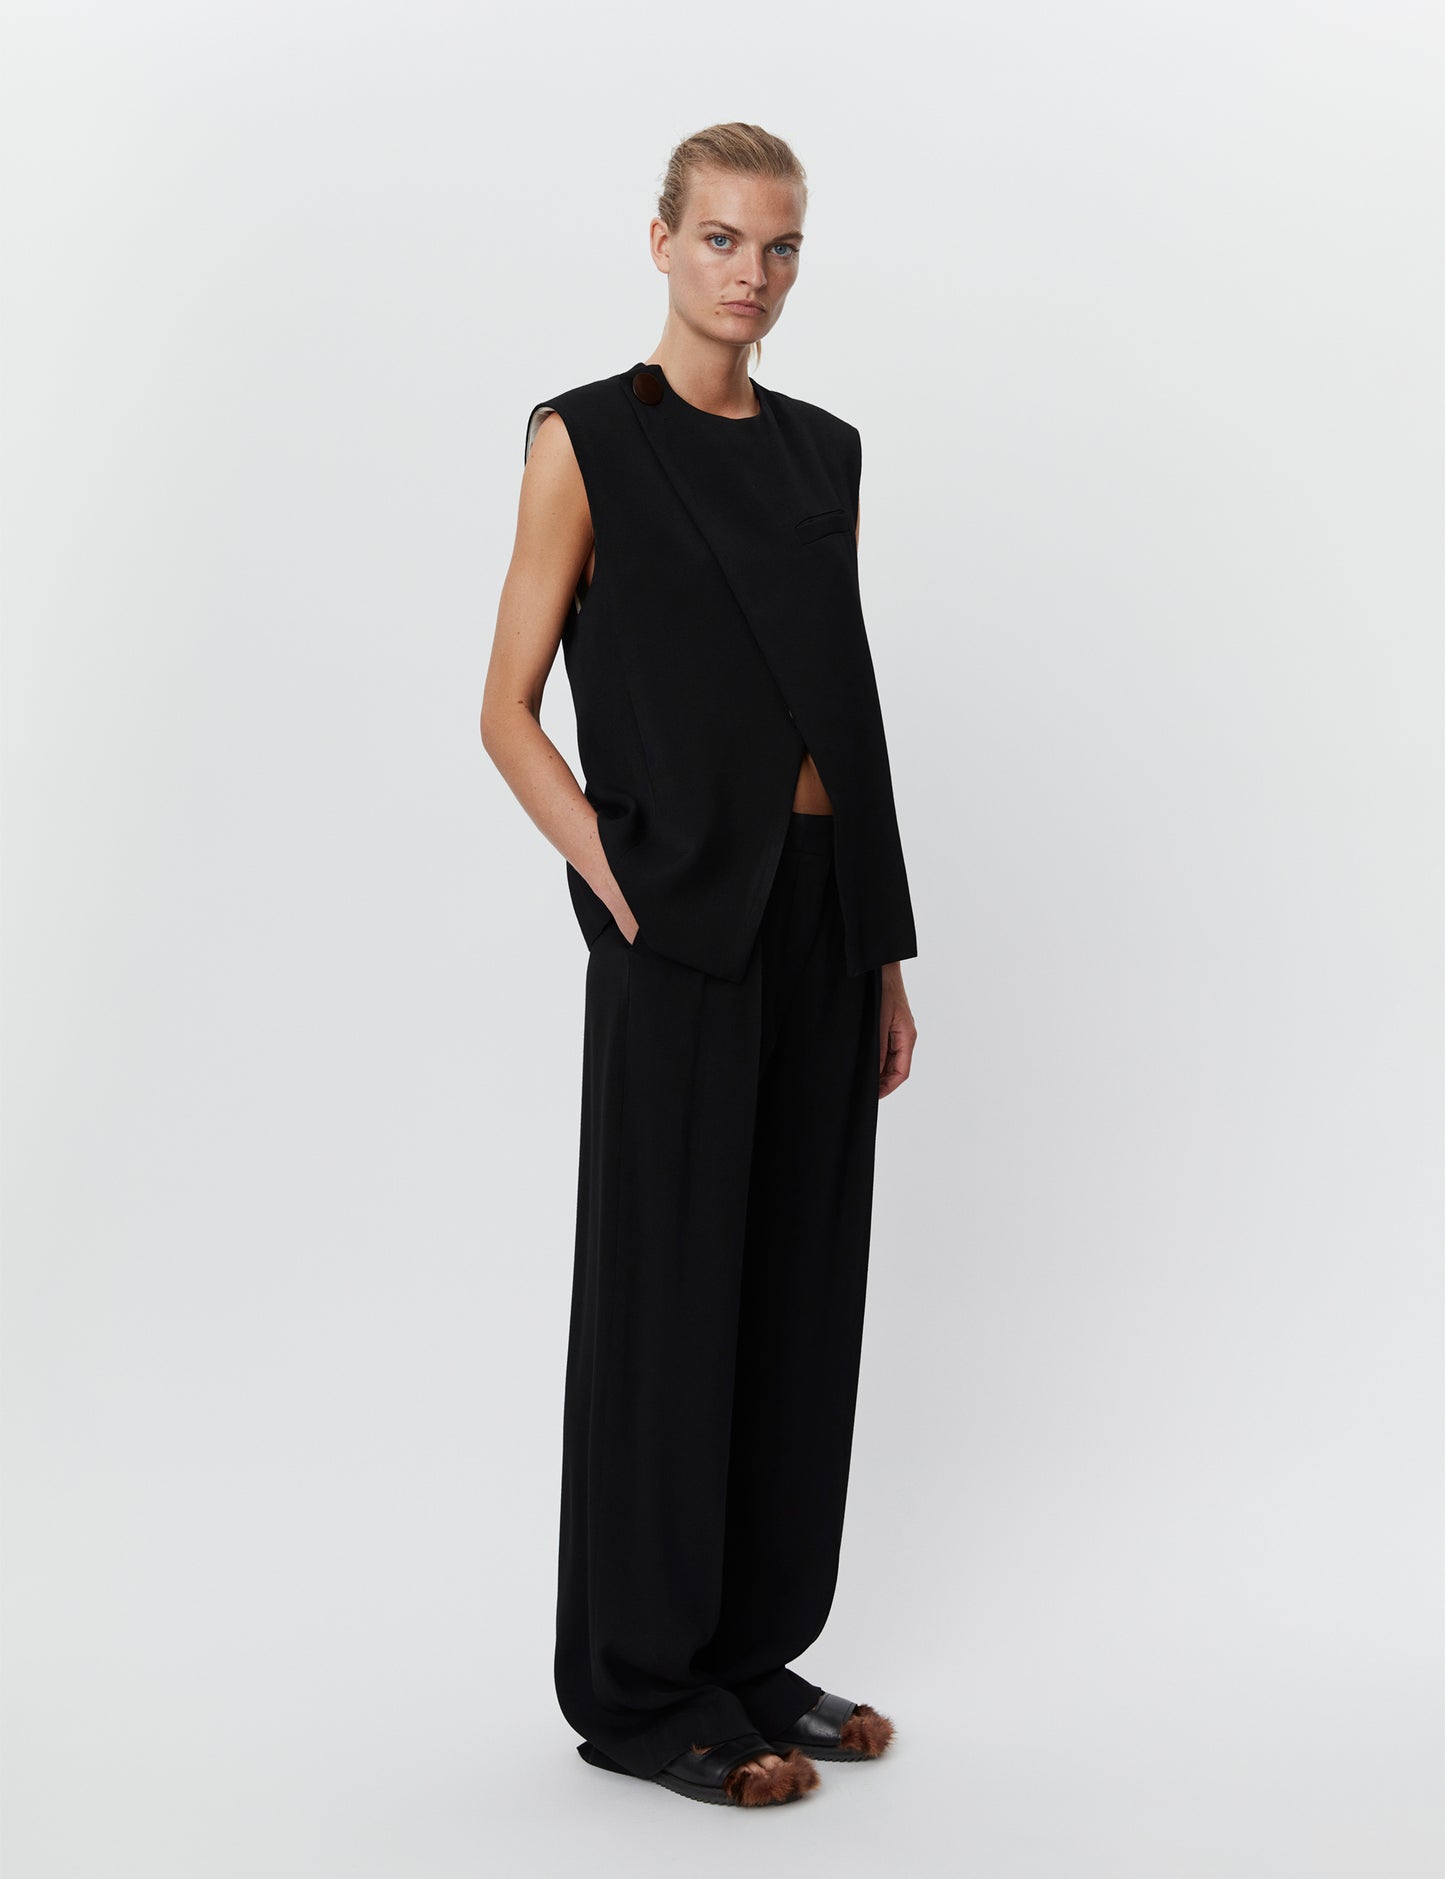 Day Birger - Enid Asymmetrical Black Sleeveless Vest